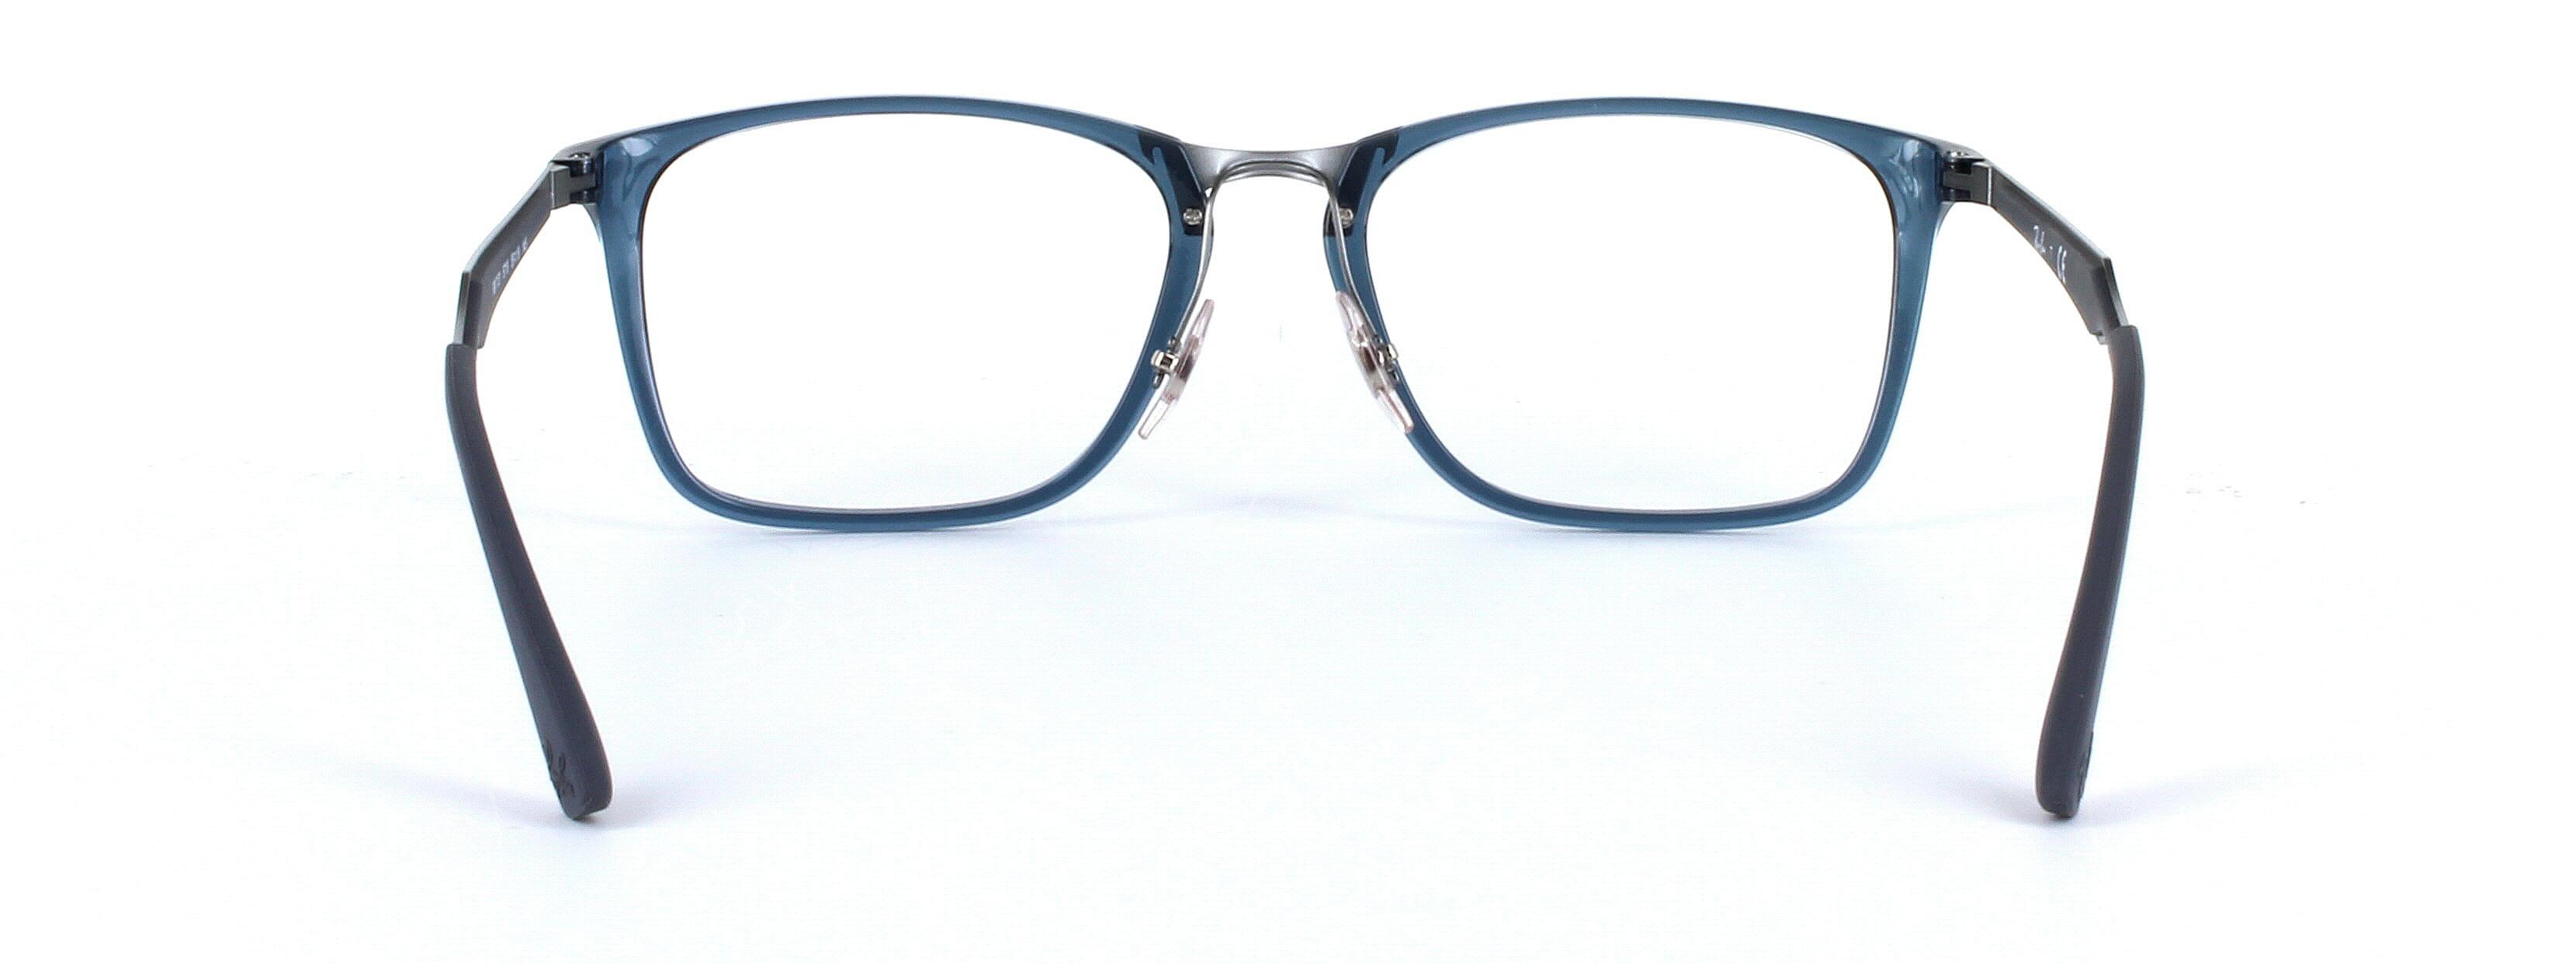 Ray Ban 7131 - gents full-rim gcetate glasses - Crystal blue - image 3